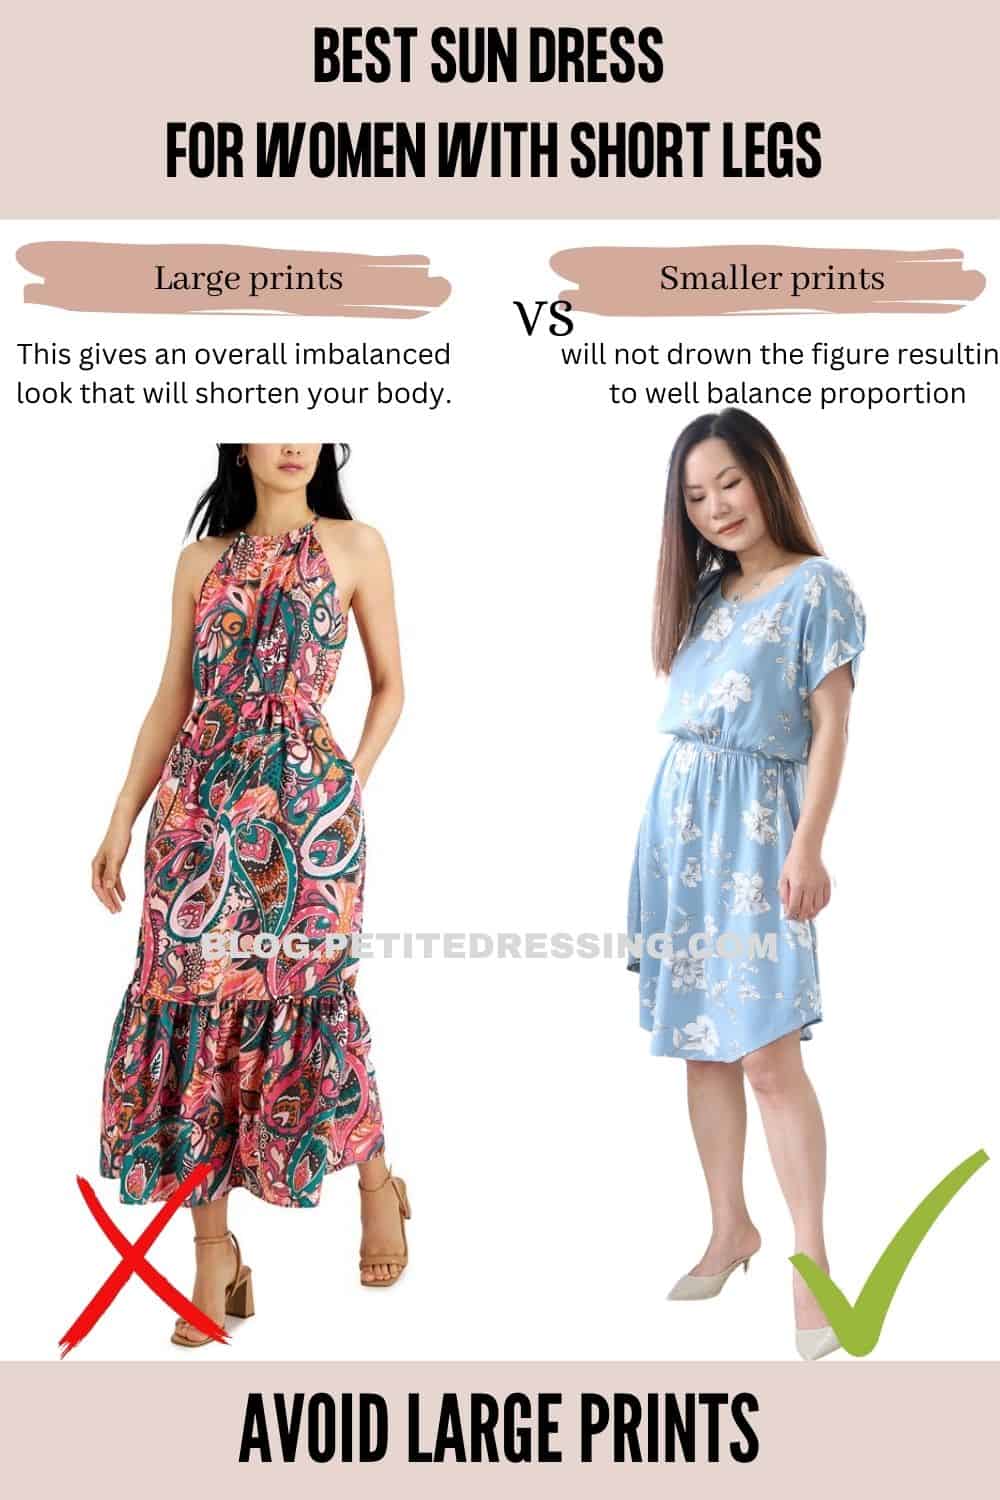 Sun dress guide for women with short legs